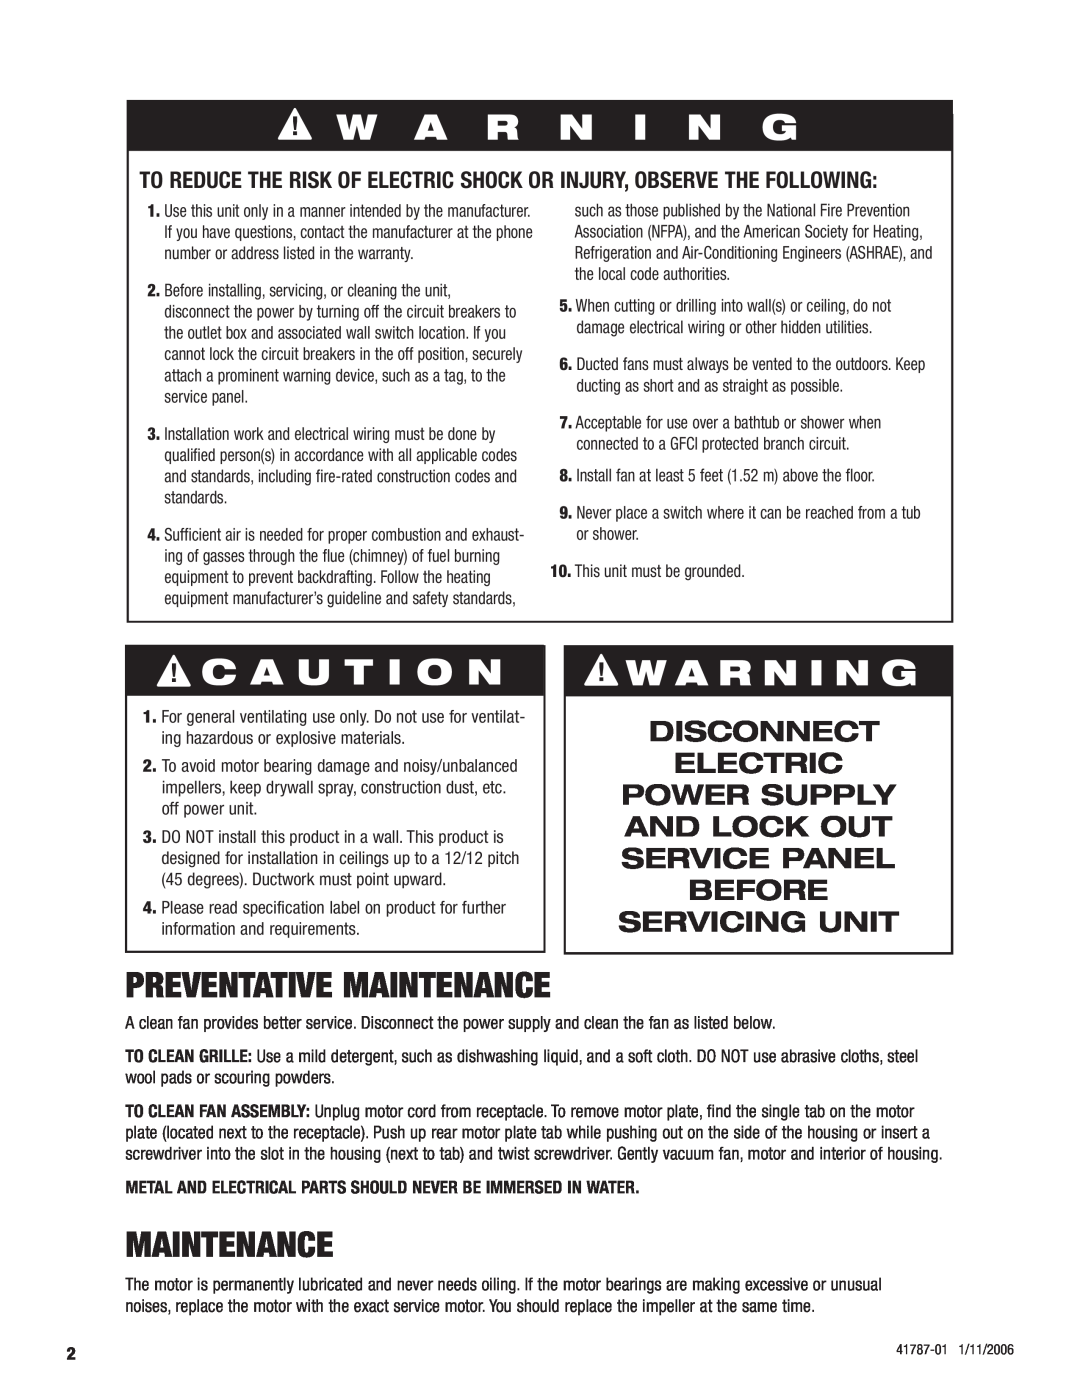 Hunter Fan 81004 manual W a r n i n g, C A U T I O N, Preventative Maintenance, Disconnect Electric 